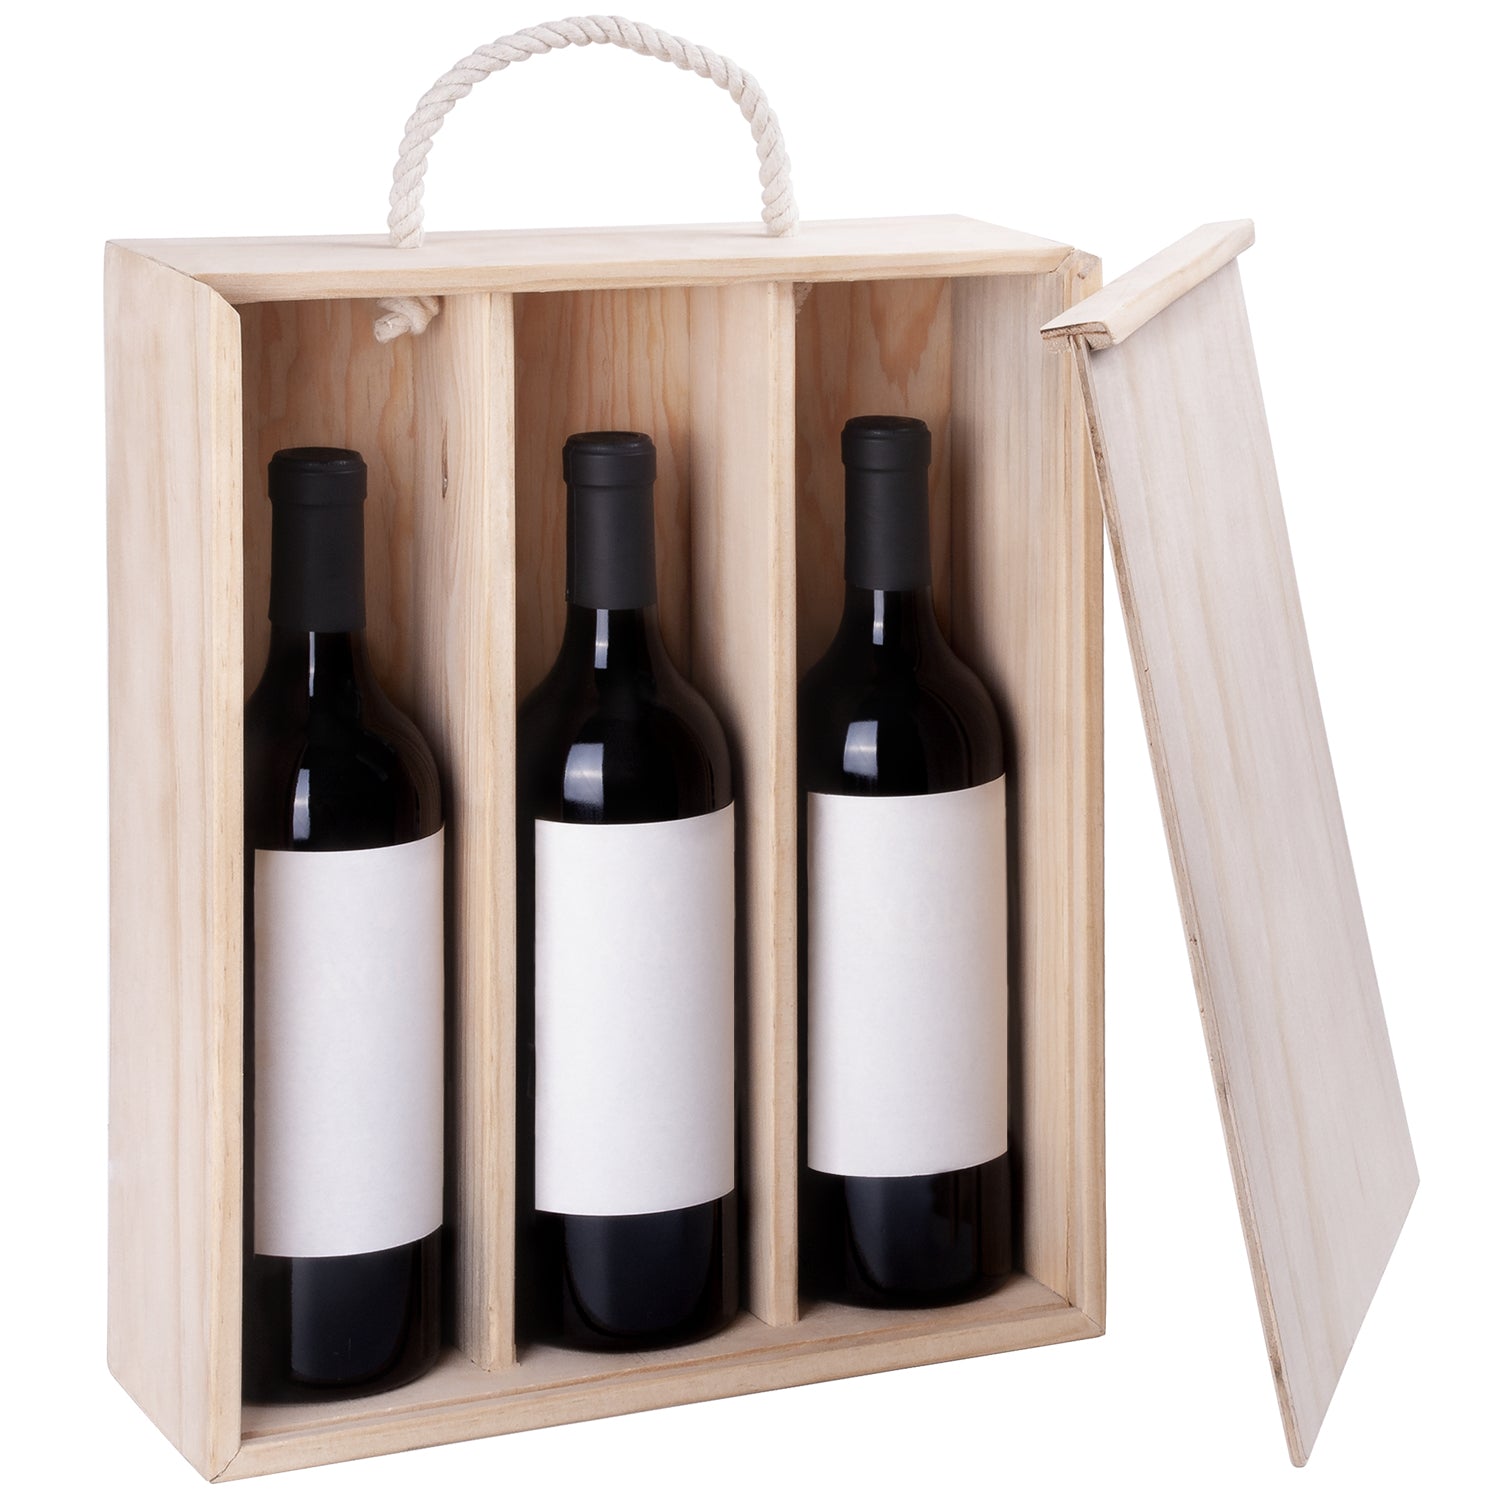 Caja de madera para vinos